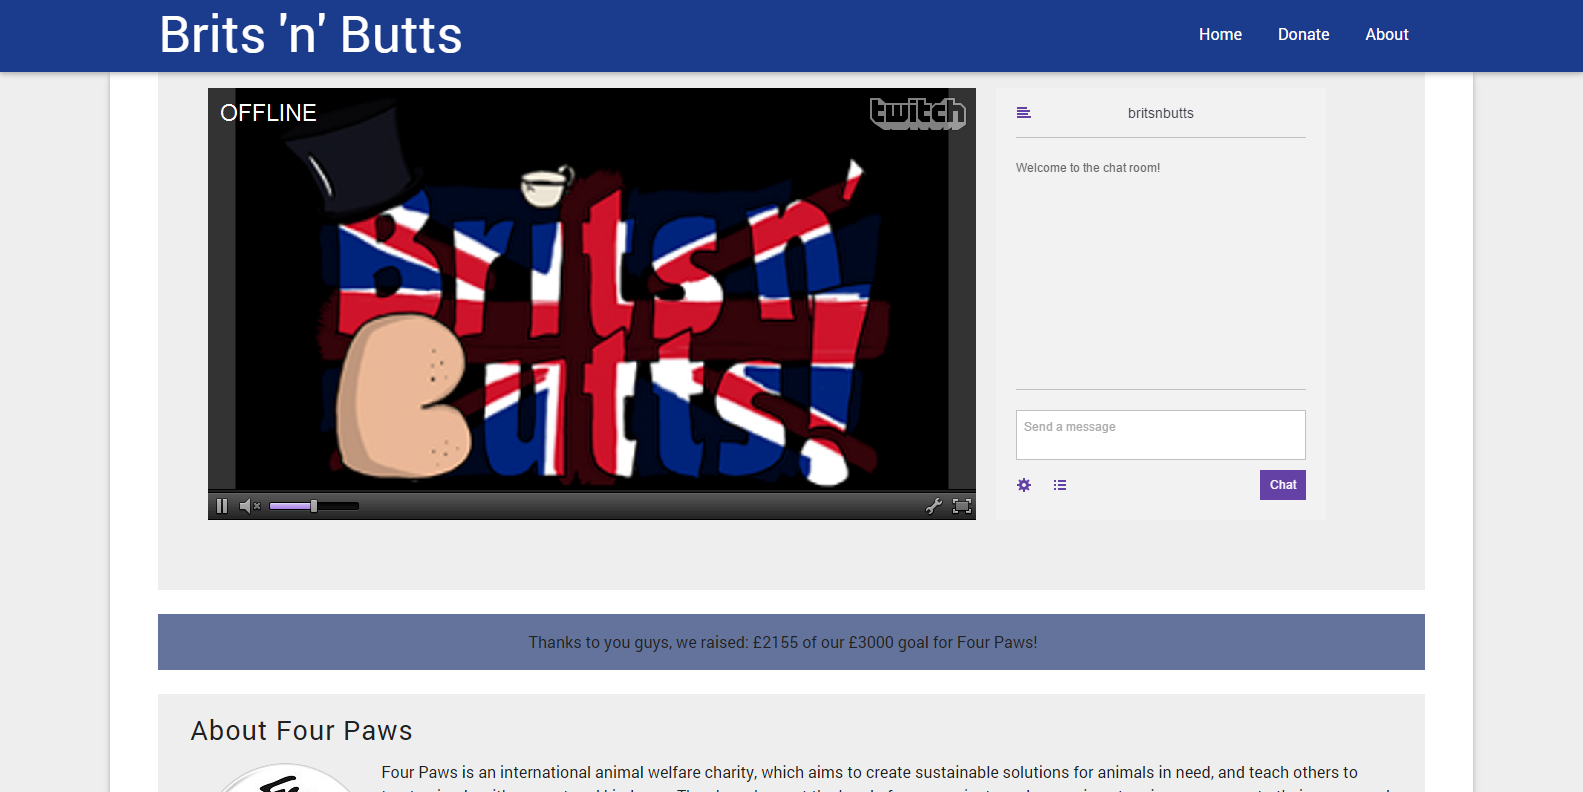 Brits 'n' Butts